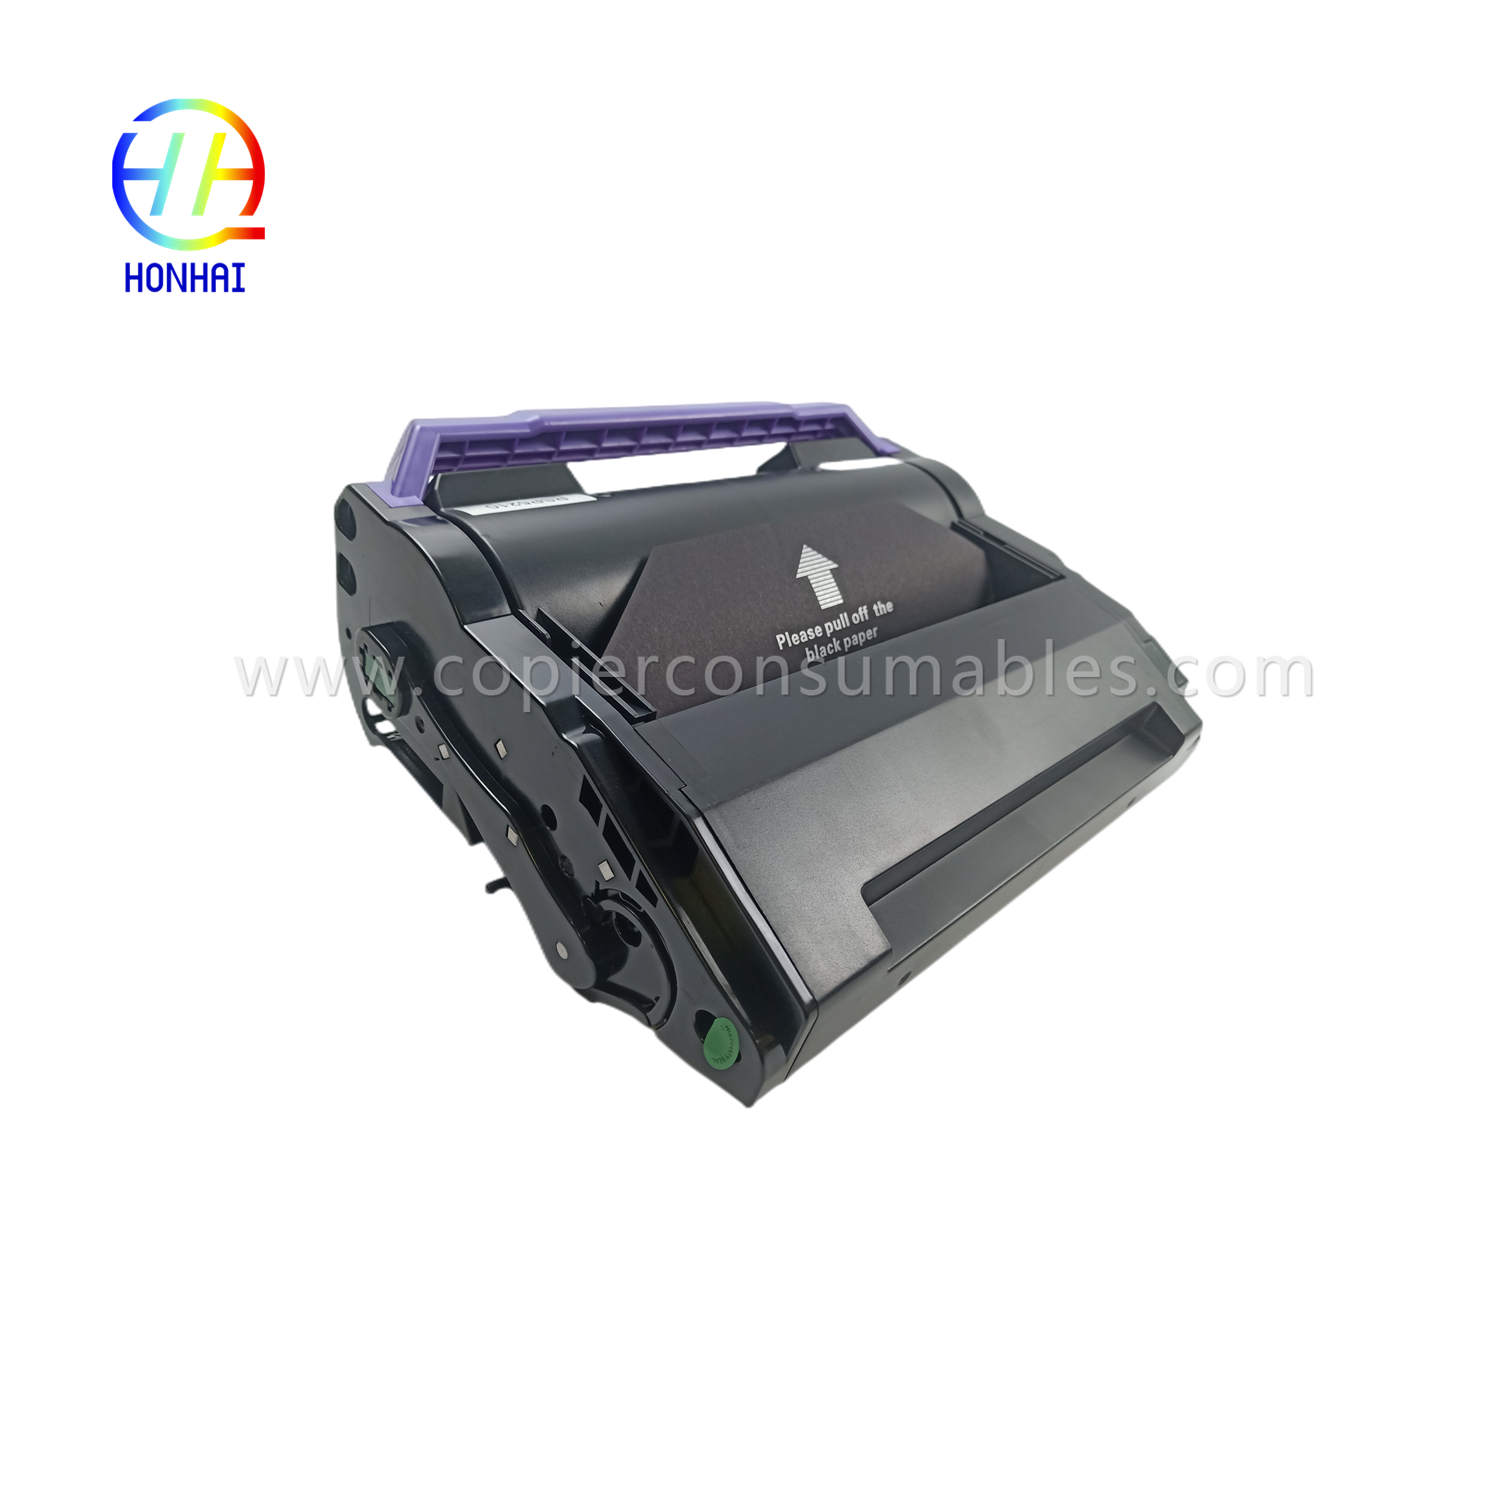 https://www.copierhonhaitech.com/toner-cartridge-black-for-ricoh-406683-sp-5200-5210-umusaruro/